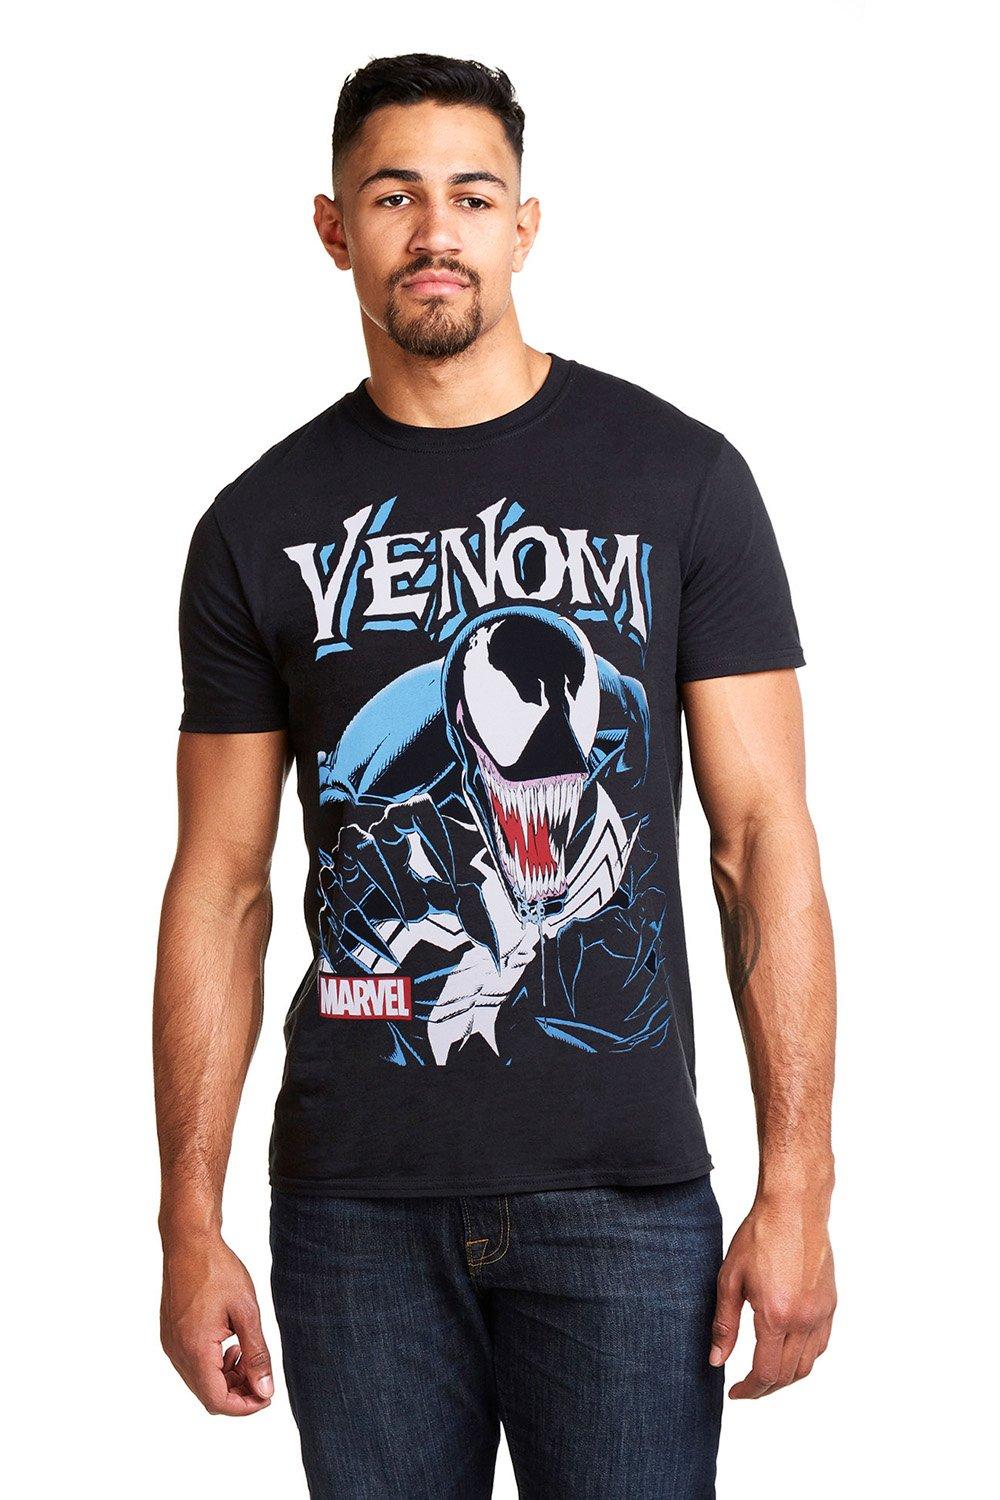 Хлопковая футболка Venom Antihero Marvel, черный antihero